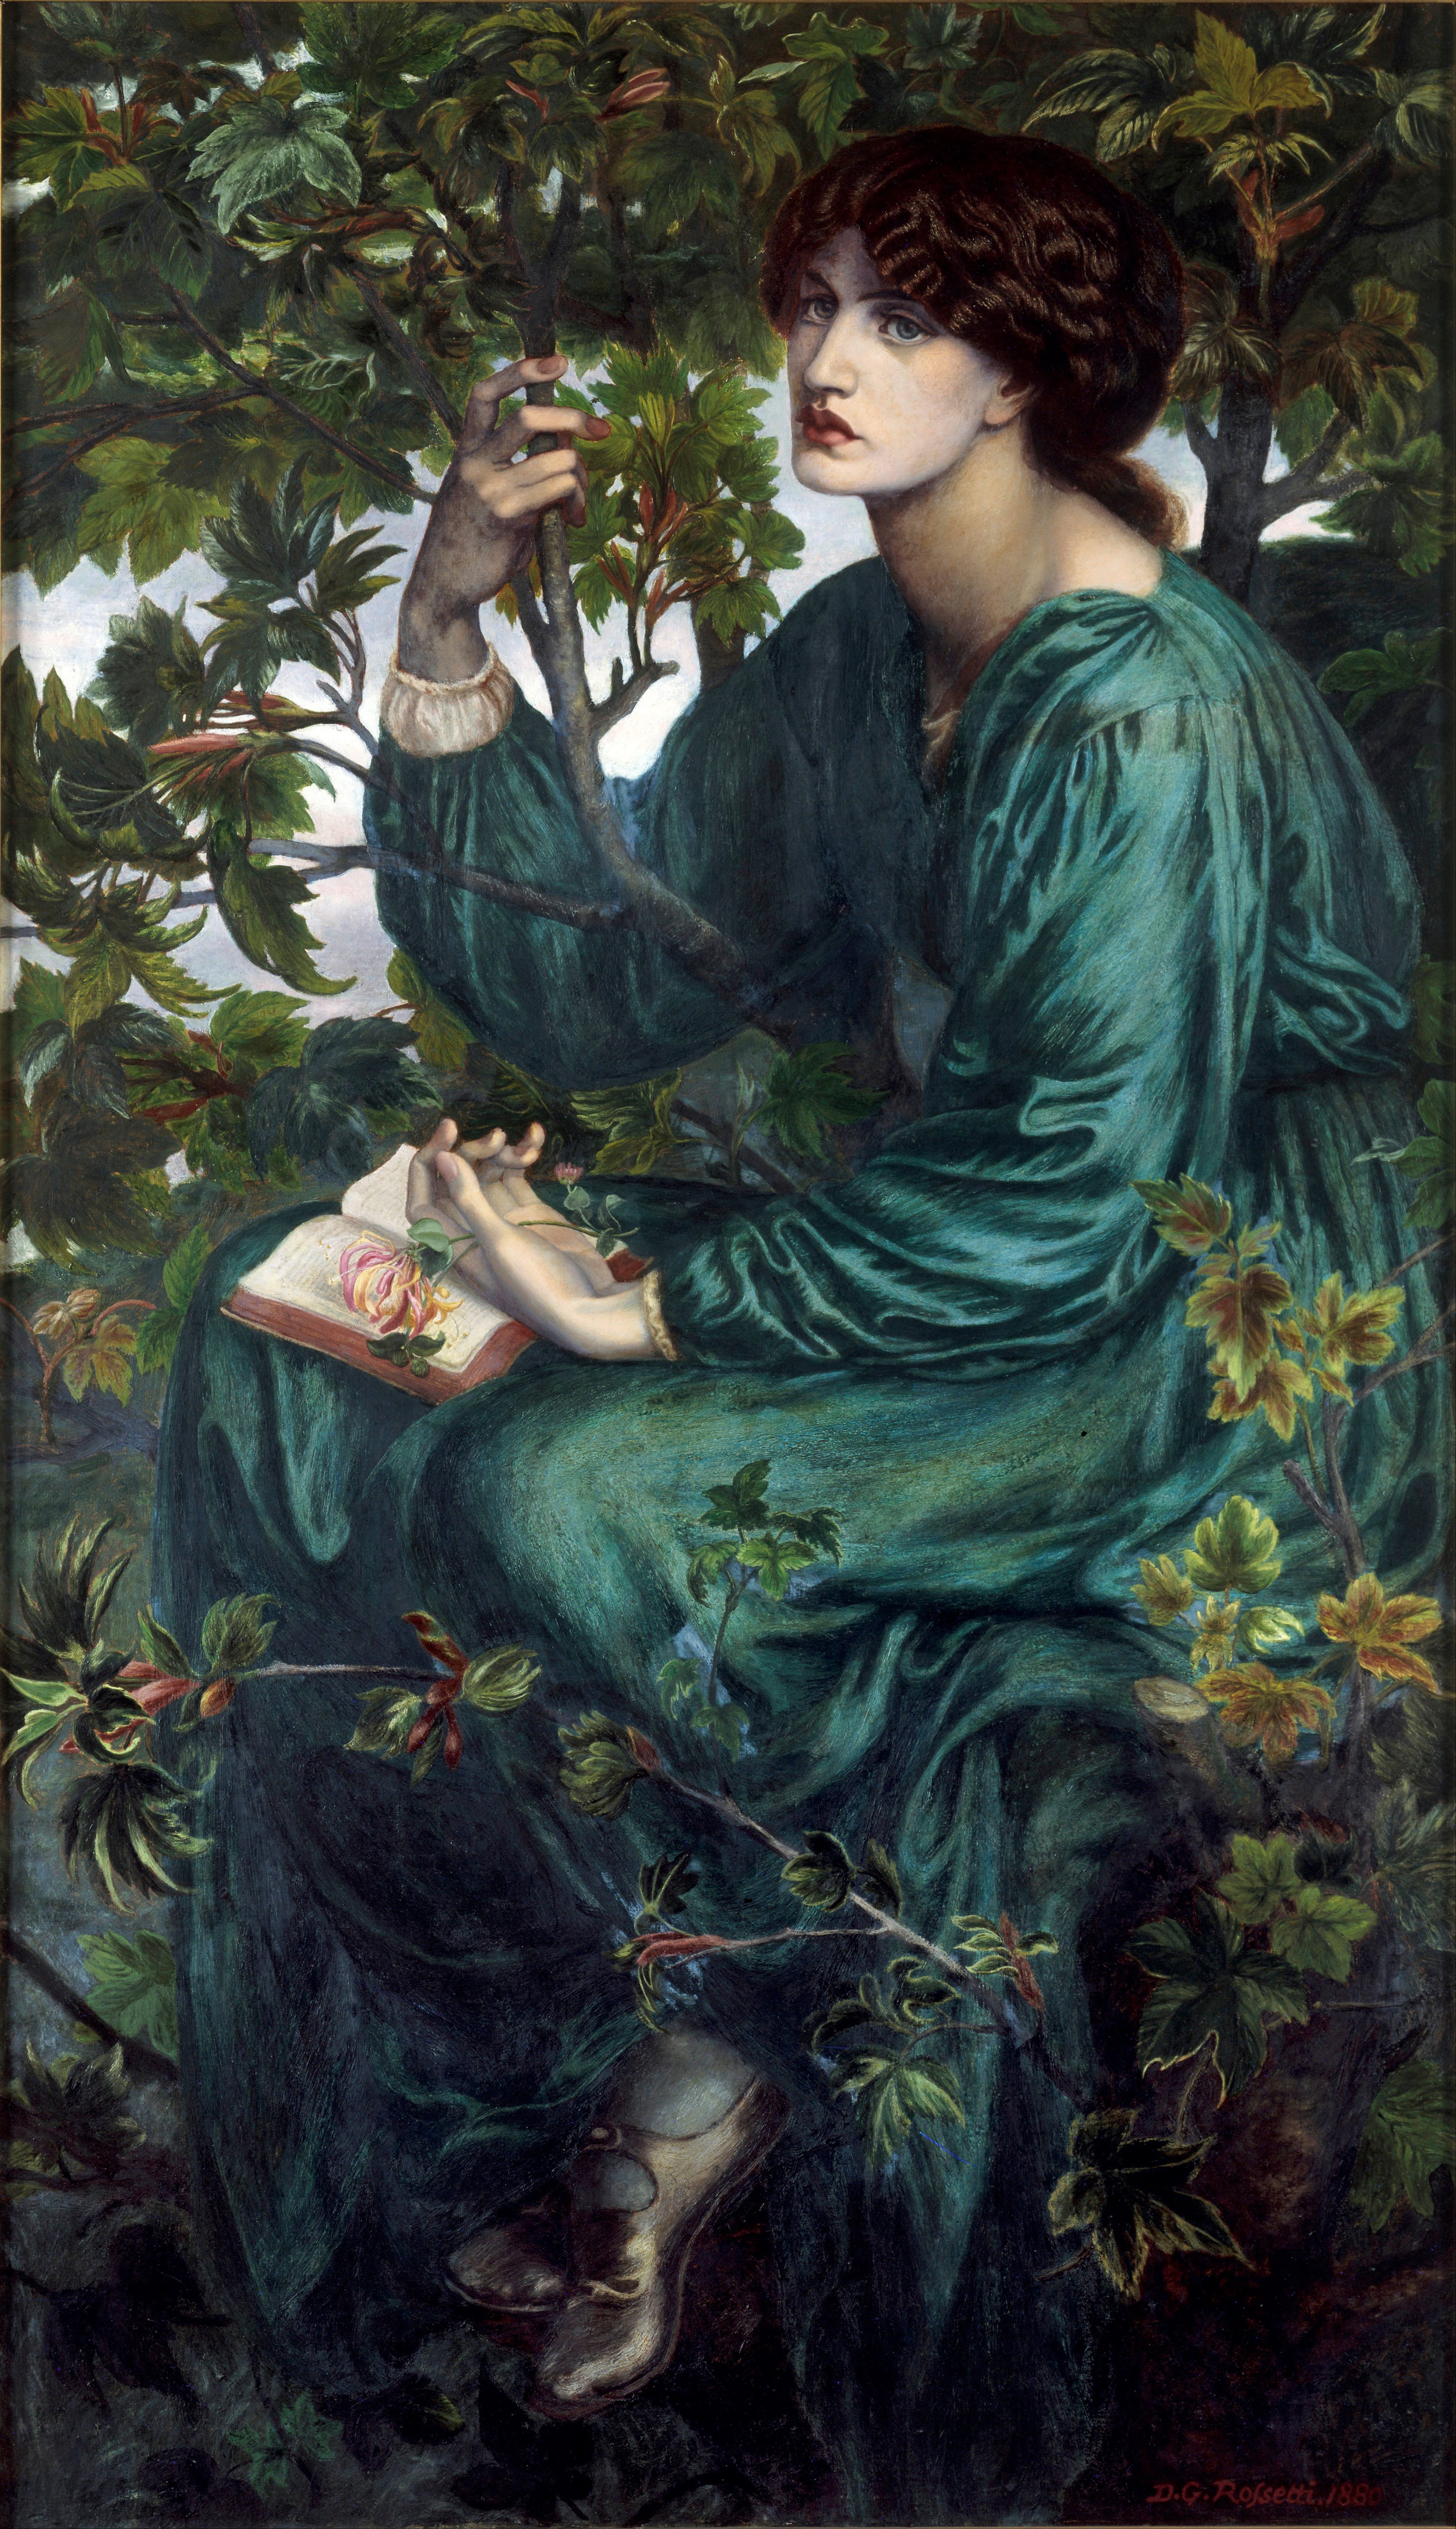 Sogno ad occhi aperti by Dante Gabriele Rossetti - 1880 - 158,7 x 92,7 cm  